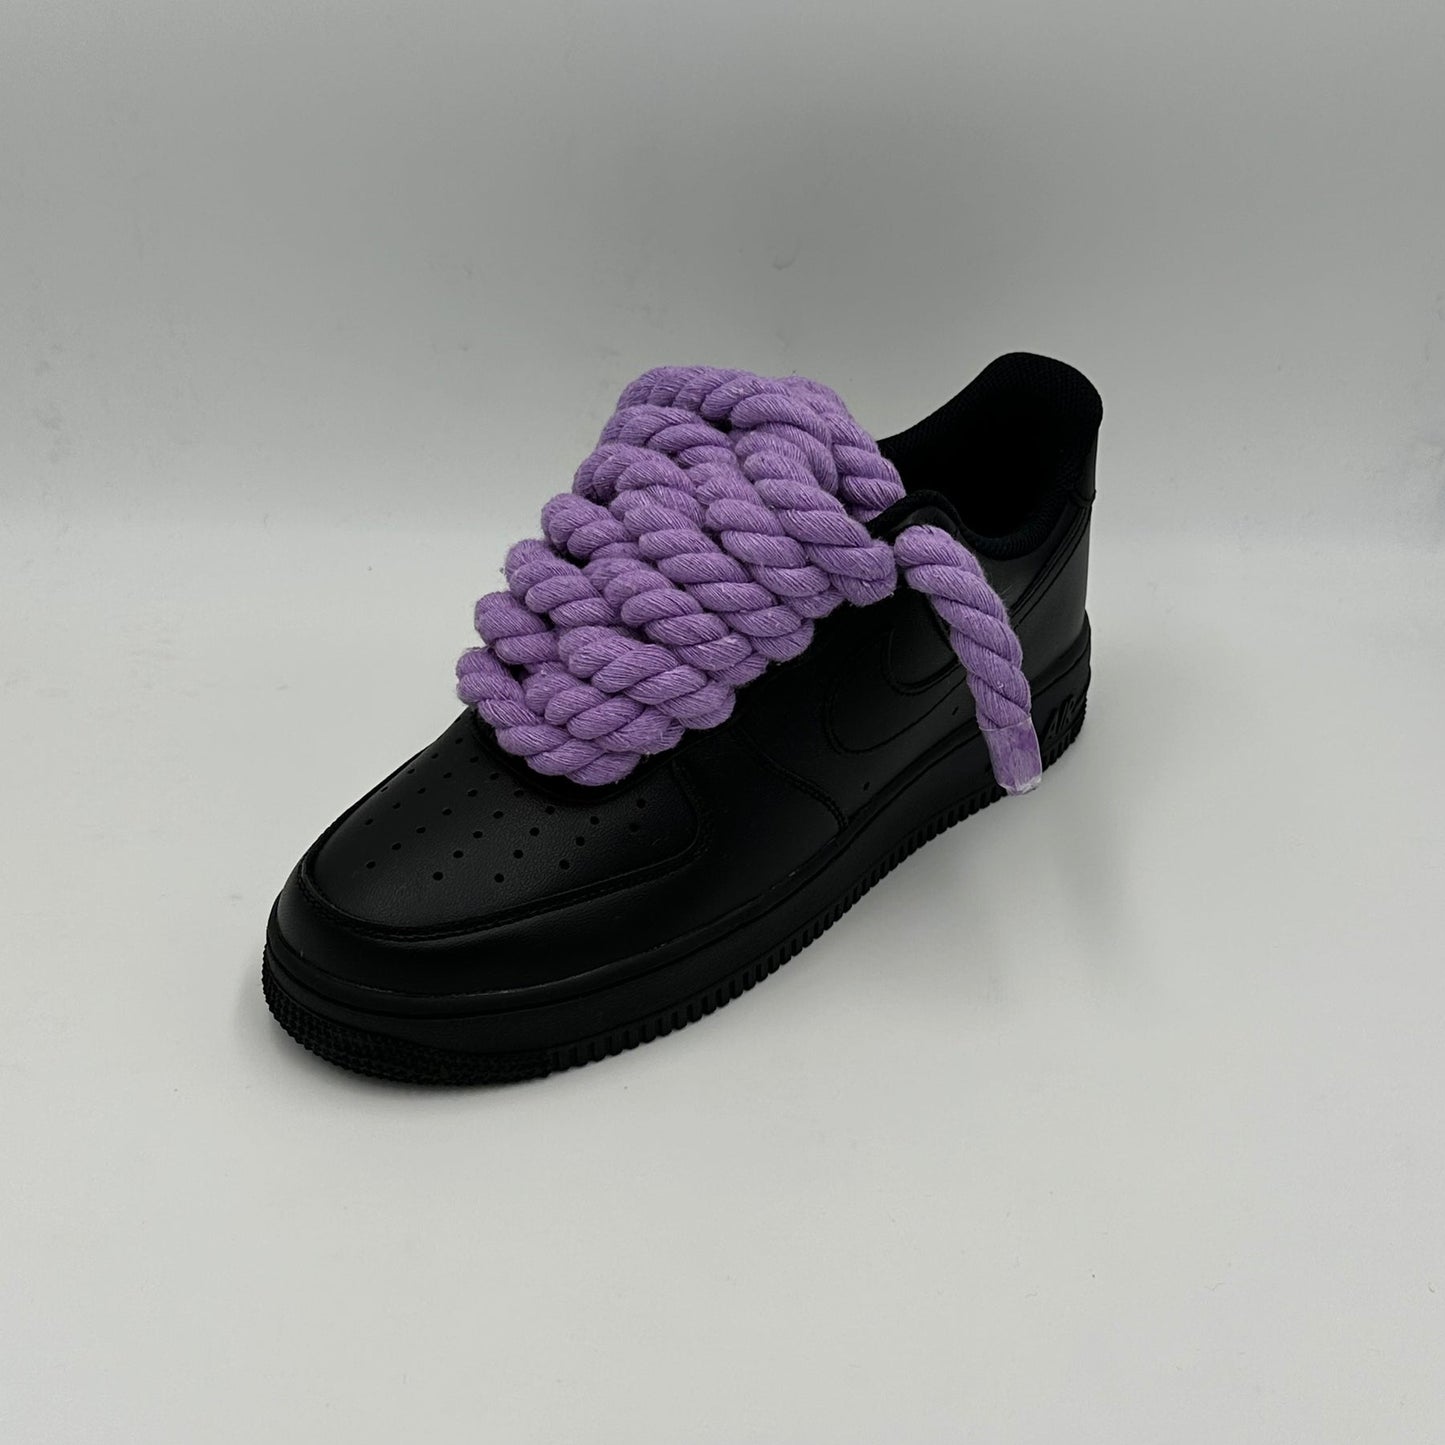 Nike Air Force 1 Black “Rope Laces Purple” - EV8 SoCal